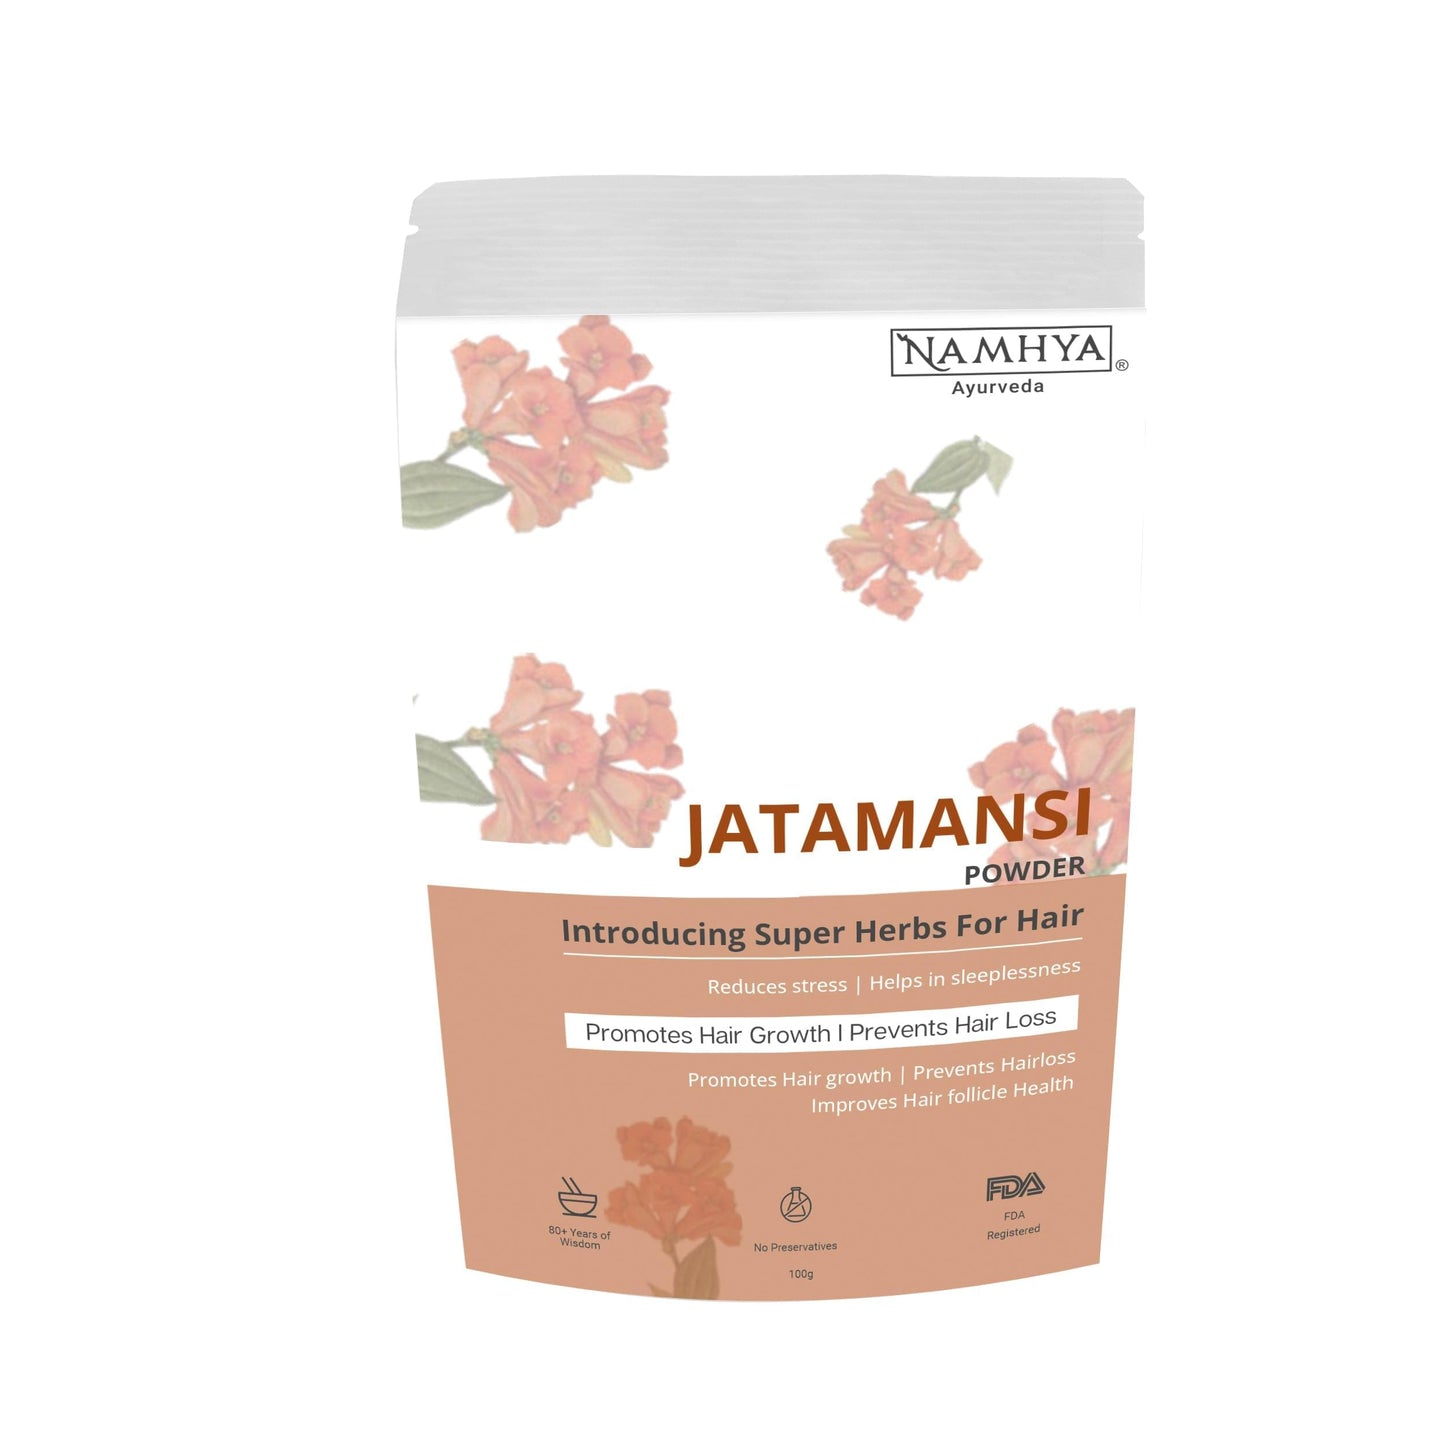 Namhya Jatamansi Powder- Promotes Brain cell & Helps in Hair Loss (100g)